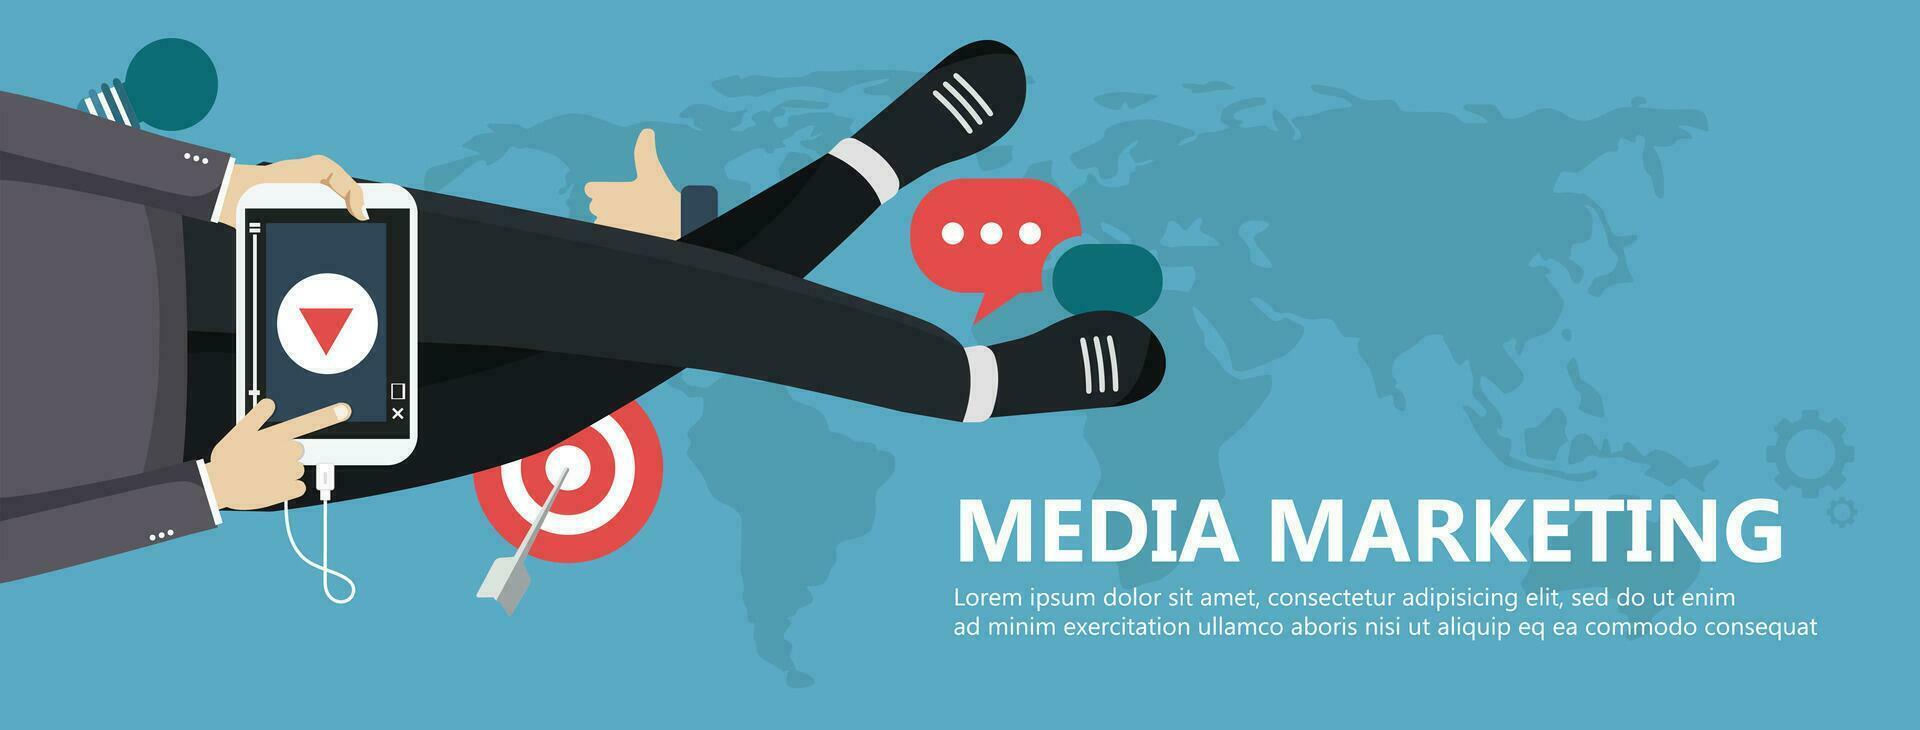 Media marketing concept. Hand holding remote control. TV icon concept. Flat vector illustration.